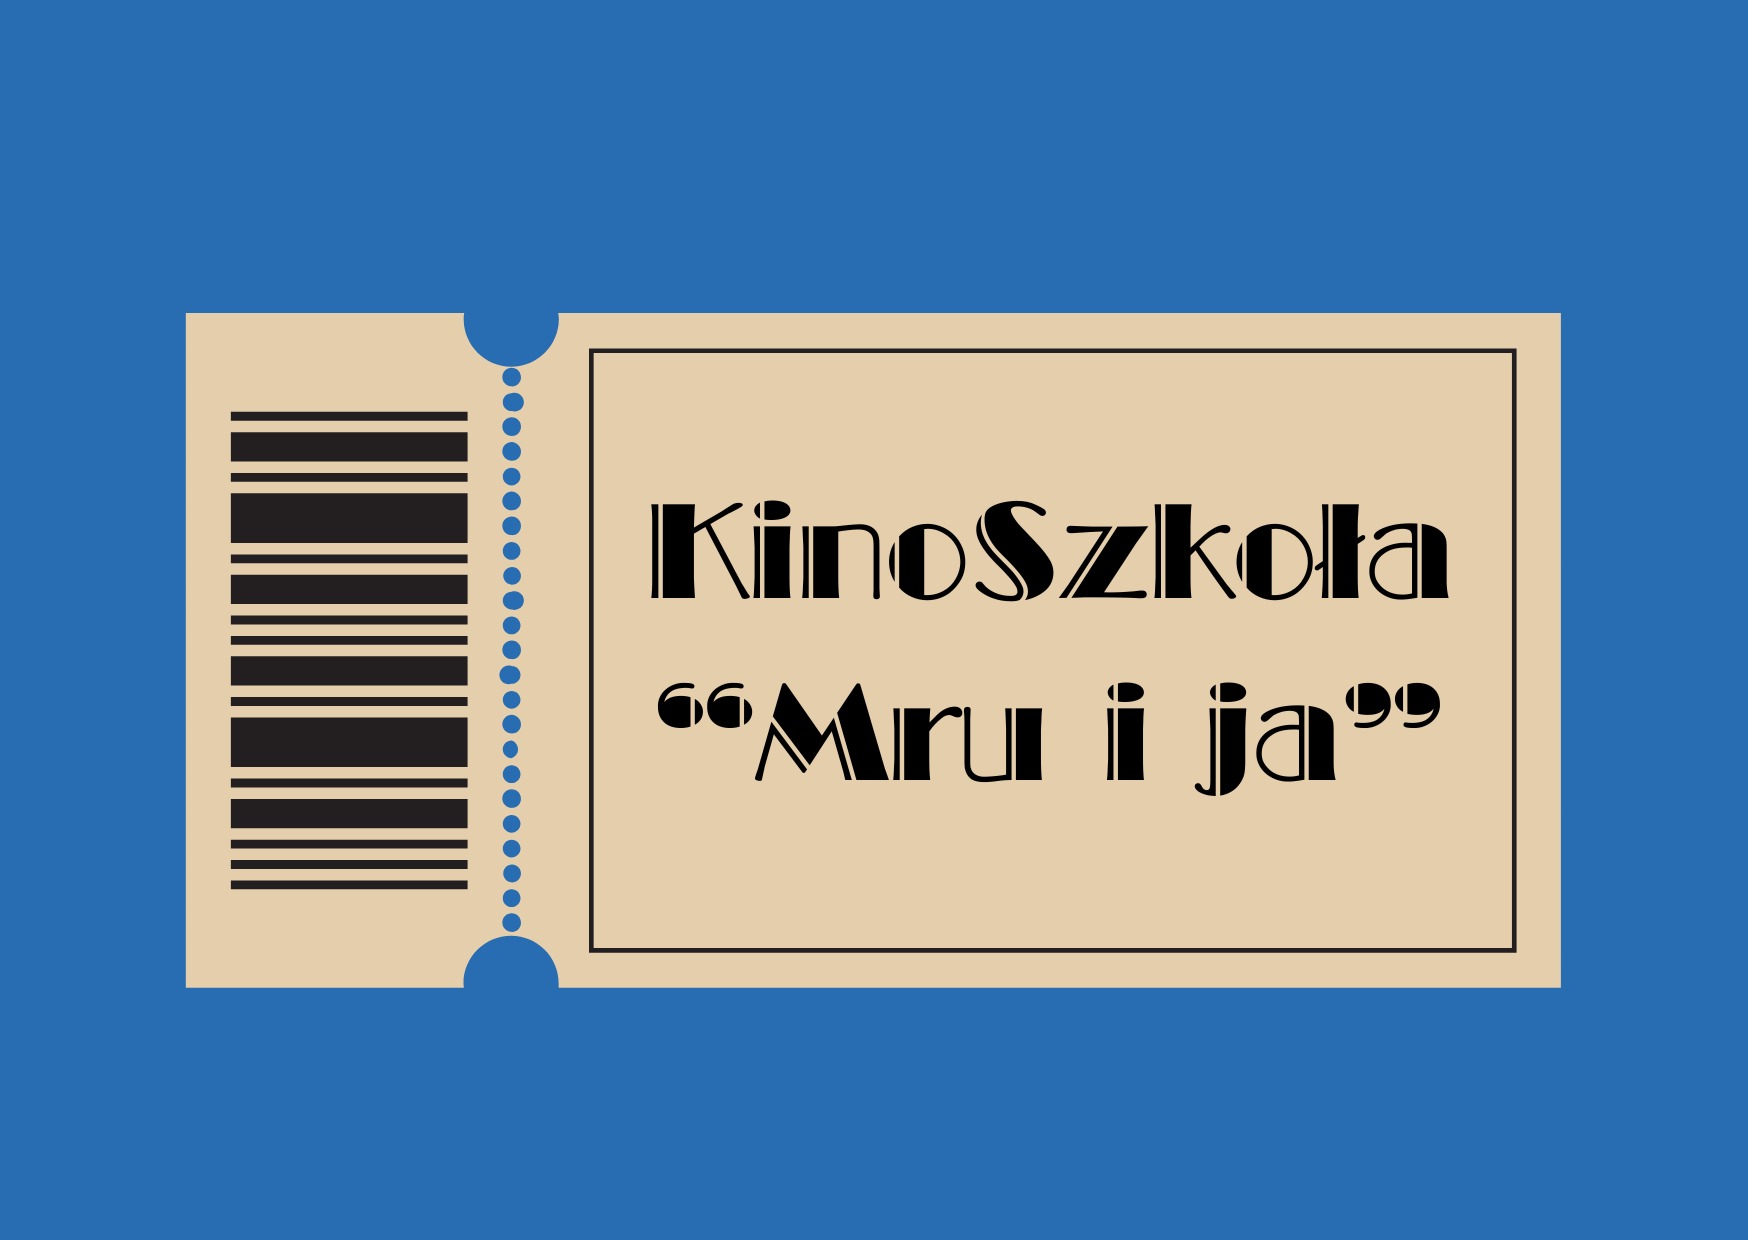 KinoSzkoła - film "Mru i ja" - Obrazek 1